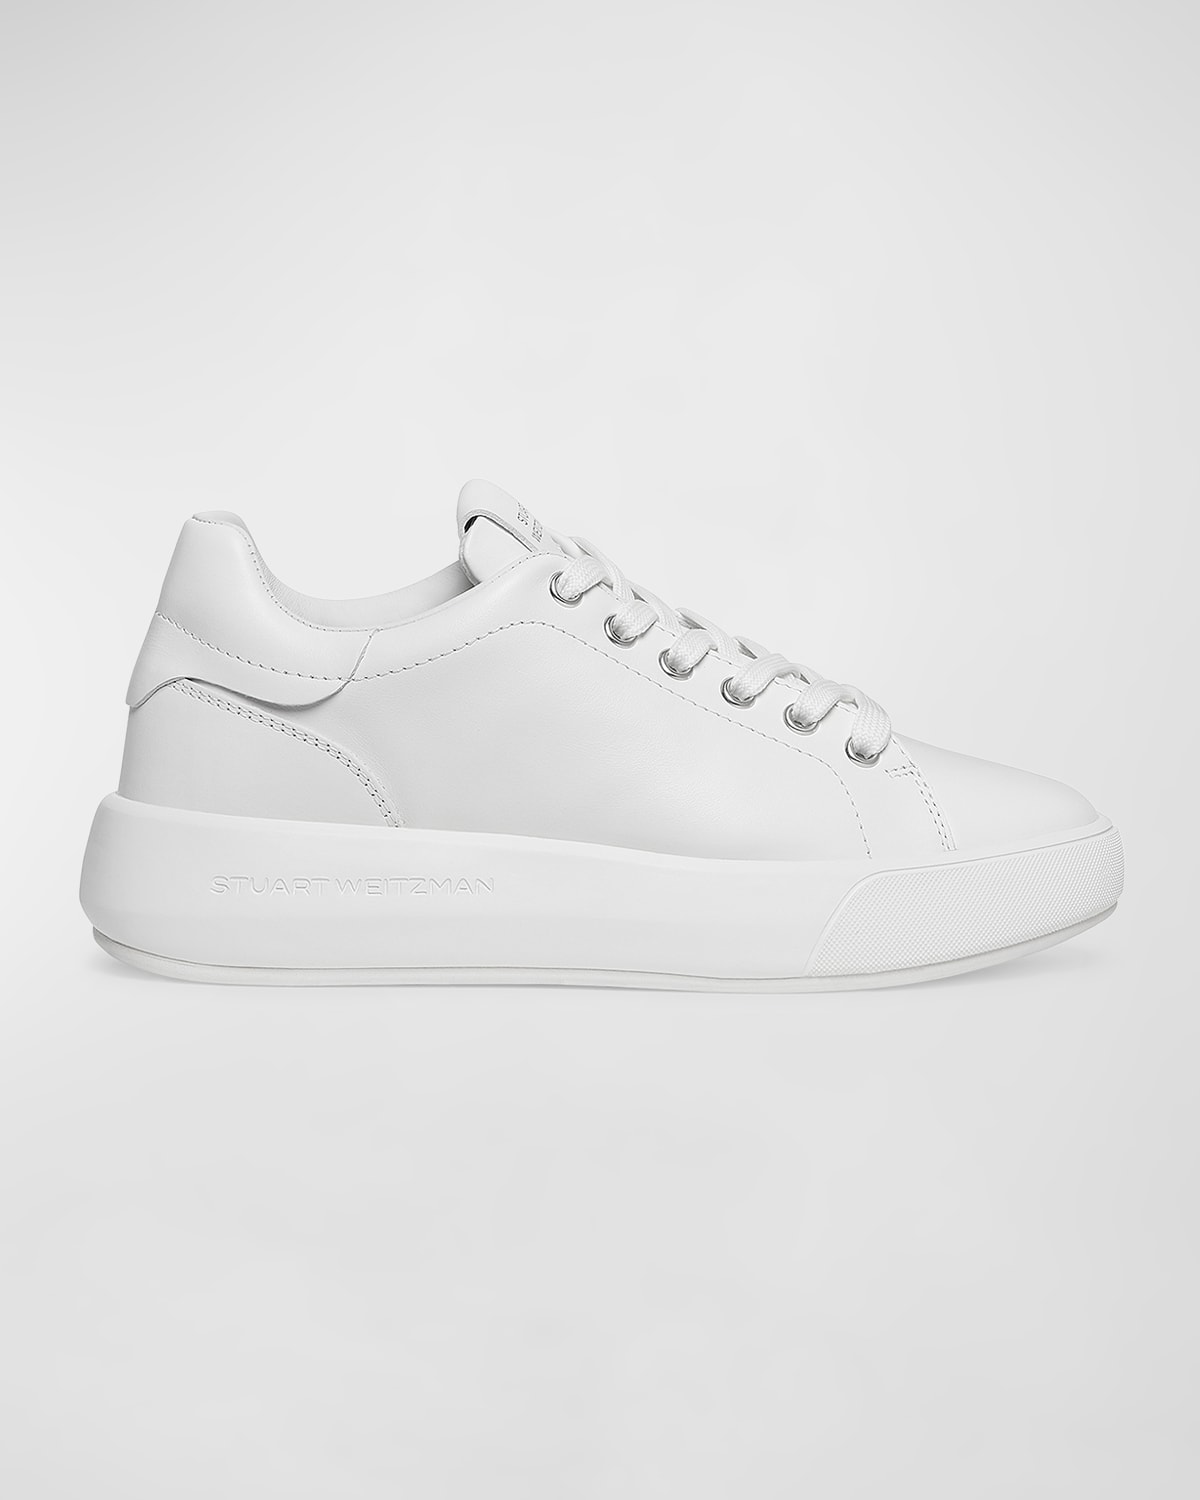 Stuart Weitzman Pro Sleek Leather Sneakers In White/black